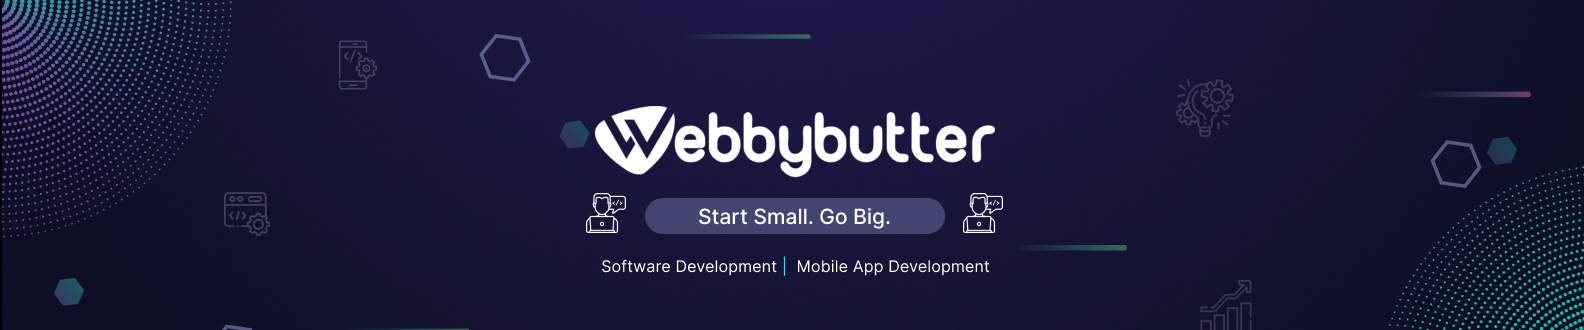 Webbybutter | Top Web & Mobile App Developers's profile banner